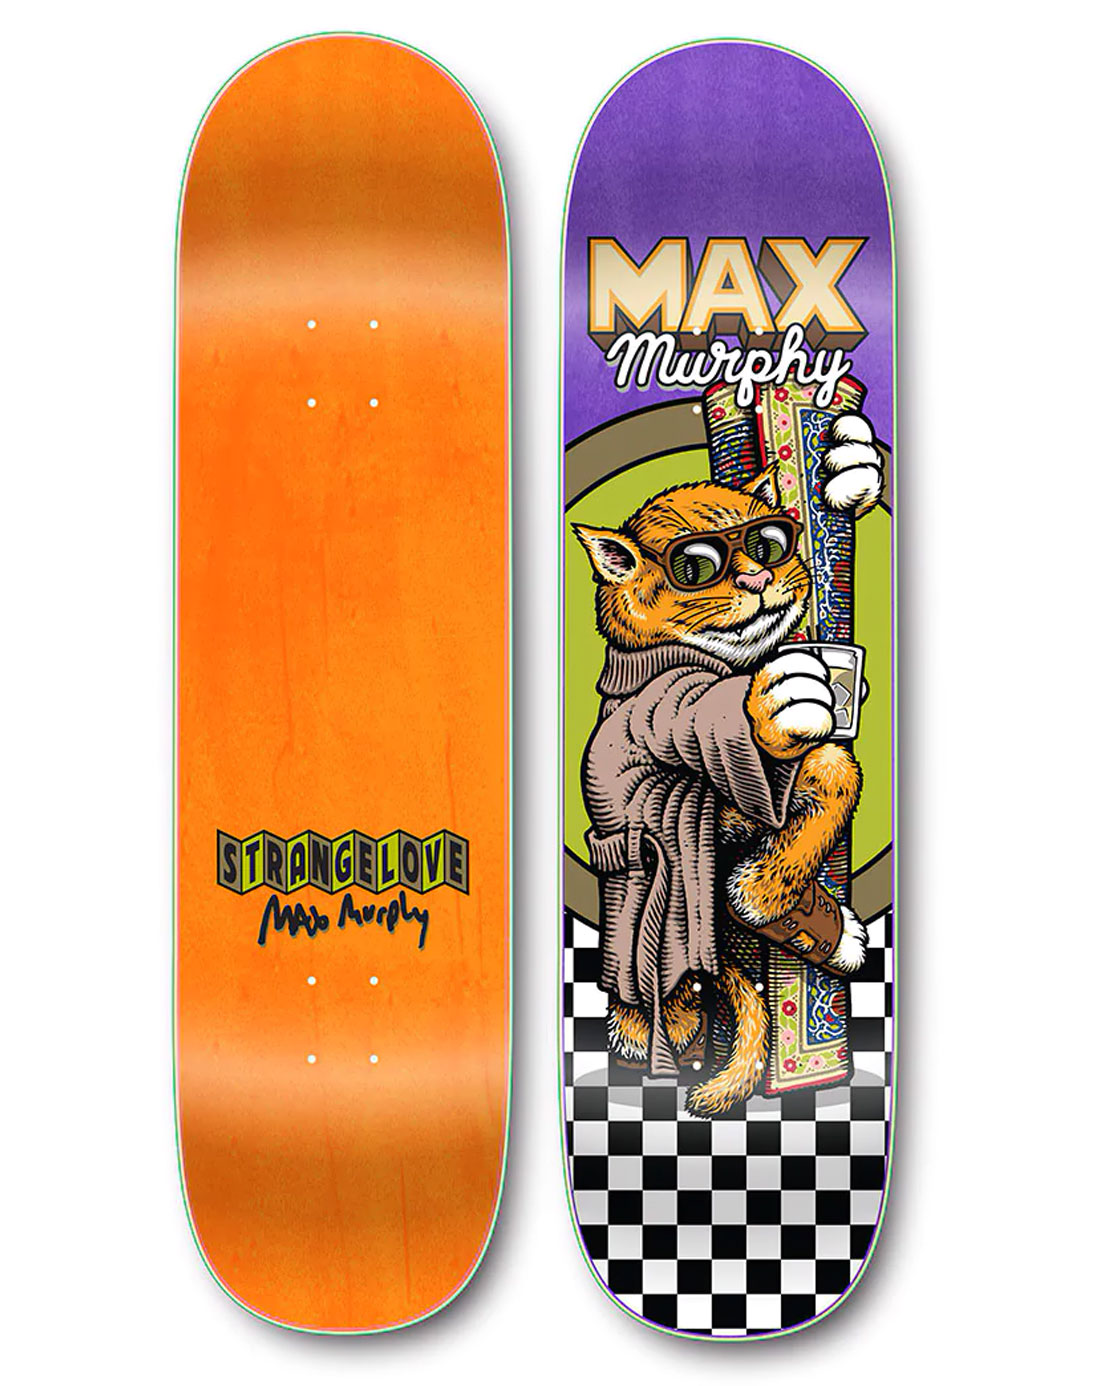 StrangeLove Plateaux Skateboard Louis the Cat (Max Murphy) 8.5